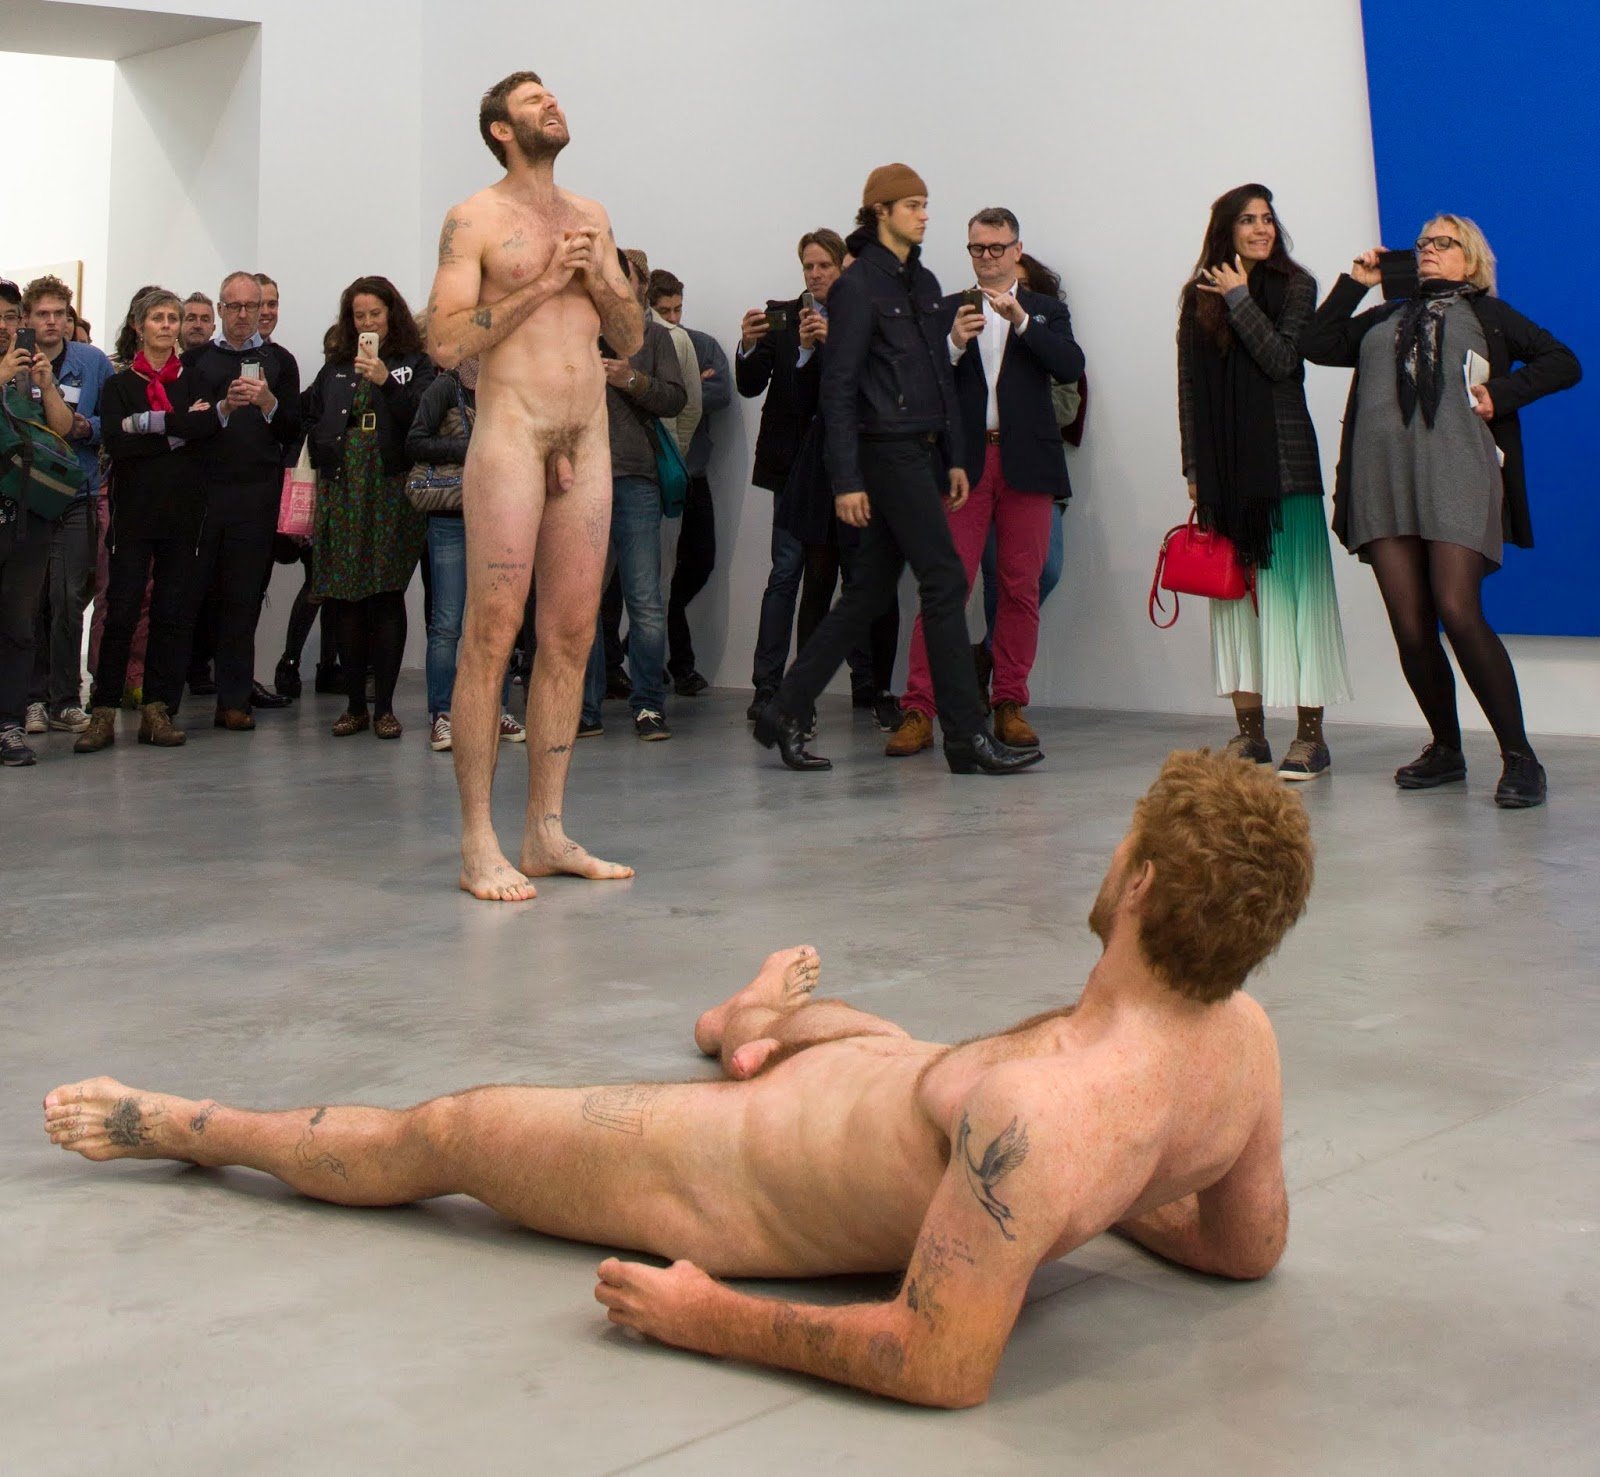 Naked Performance.